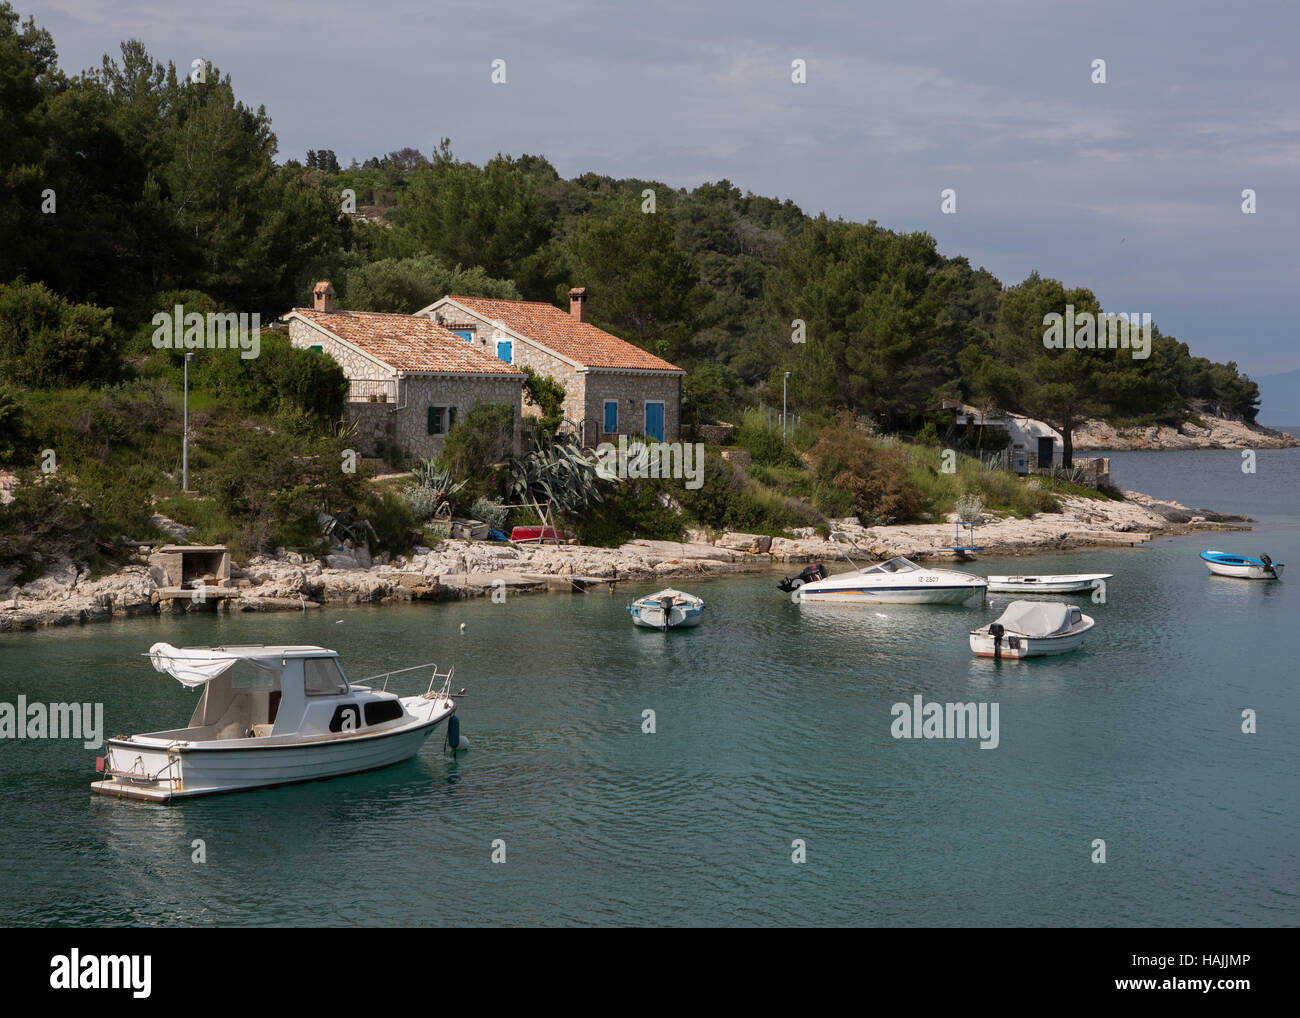 boats in a small bay on the island of Losinj, Kvarner Gulf, Croatia. Stock Photo